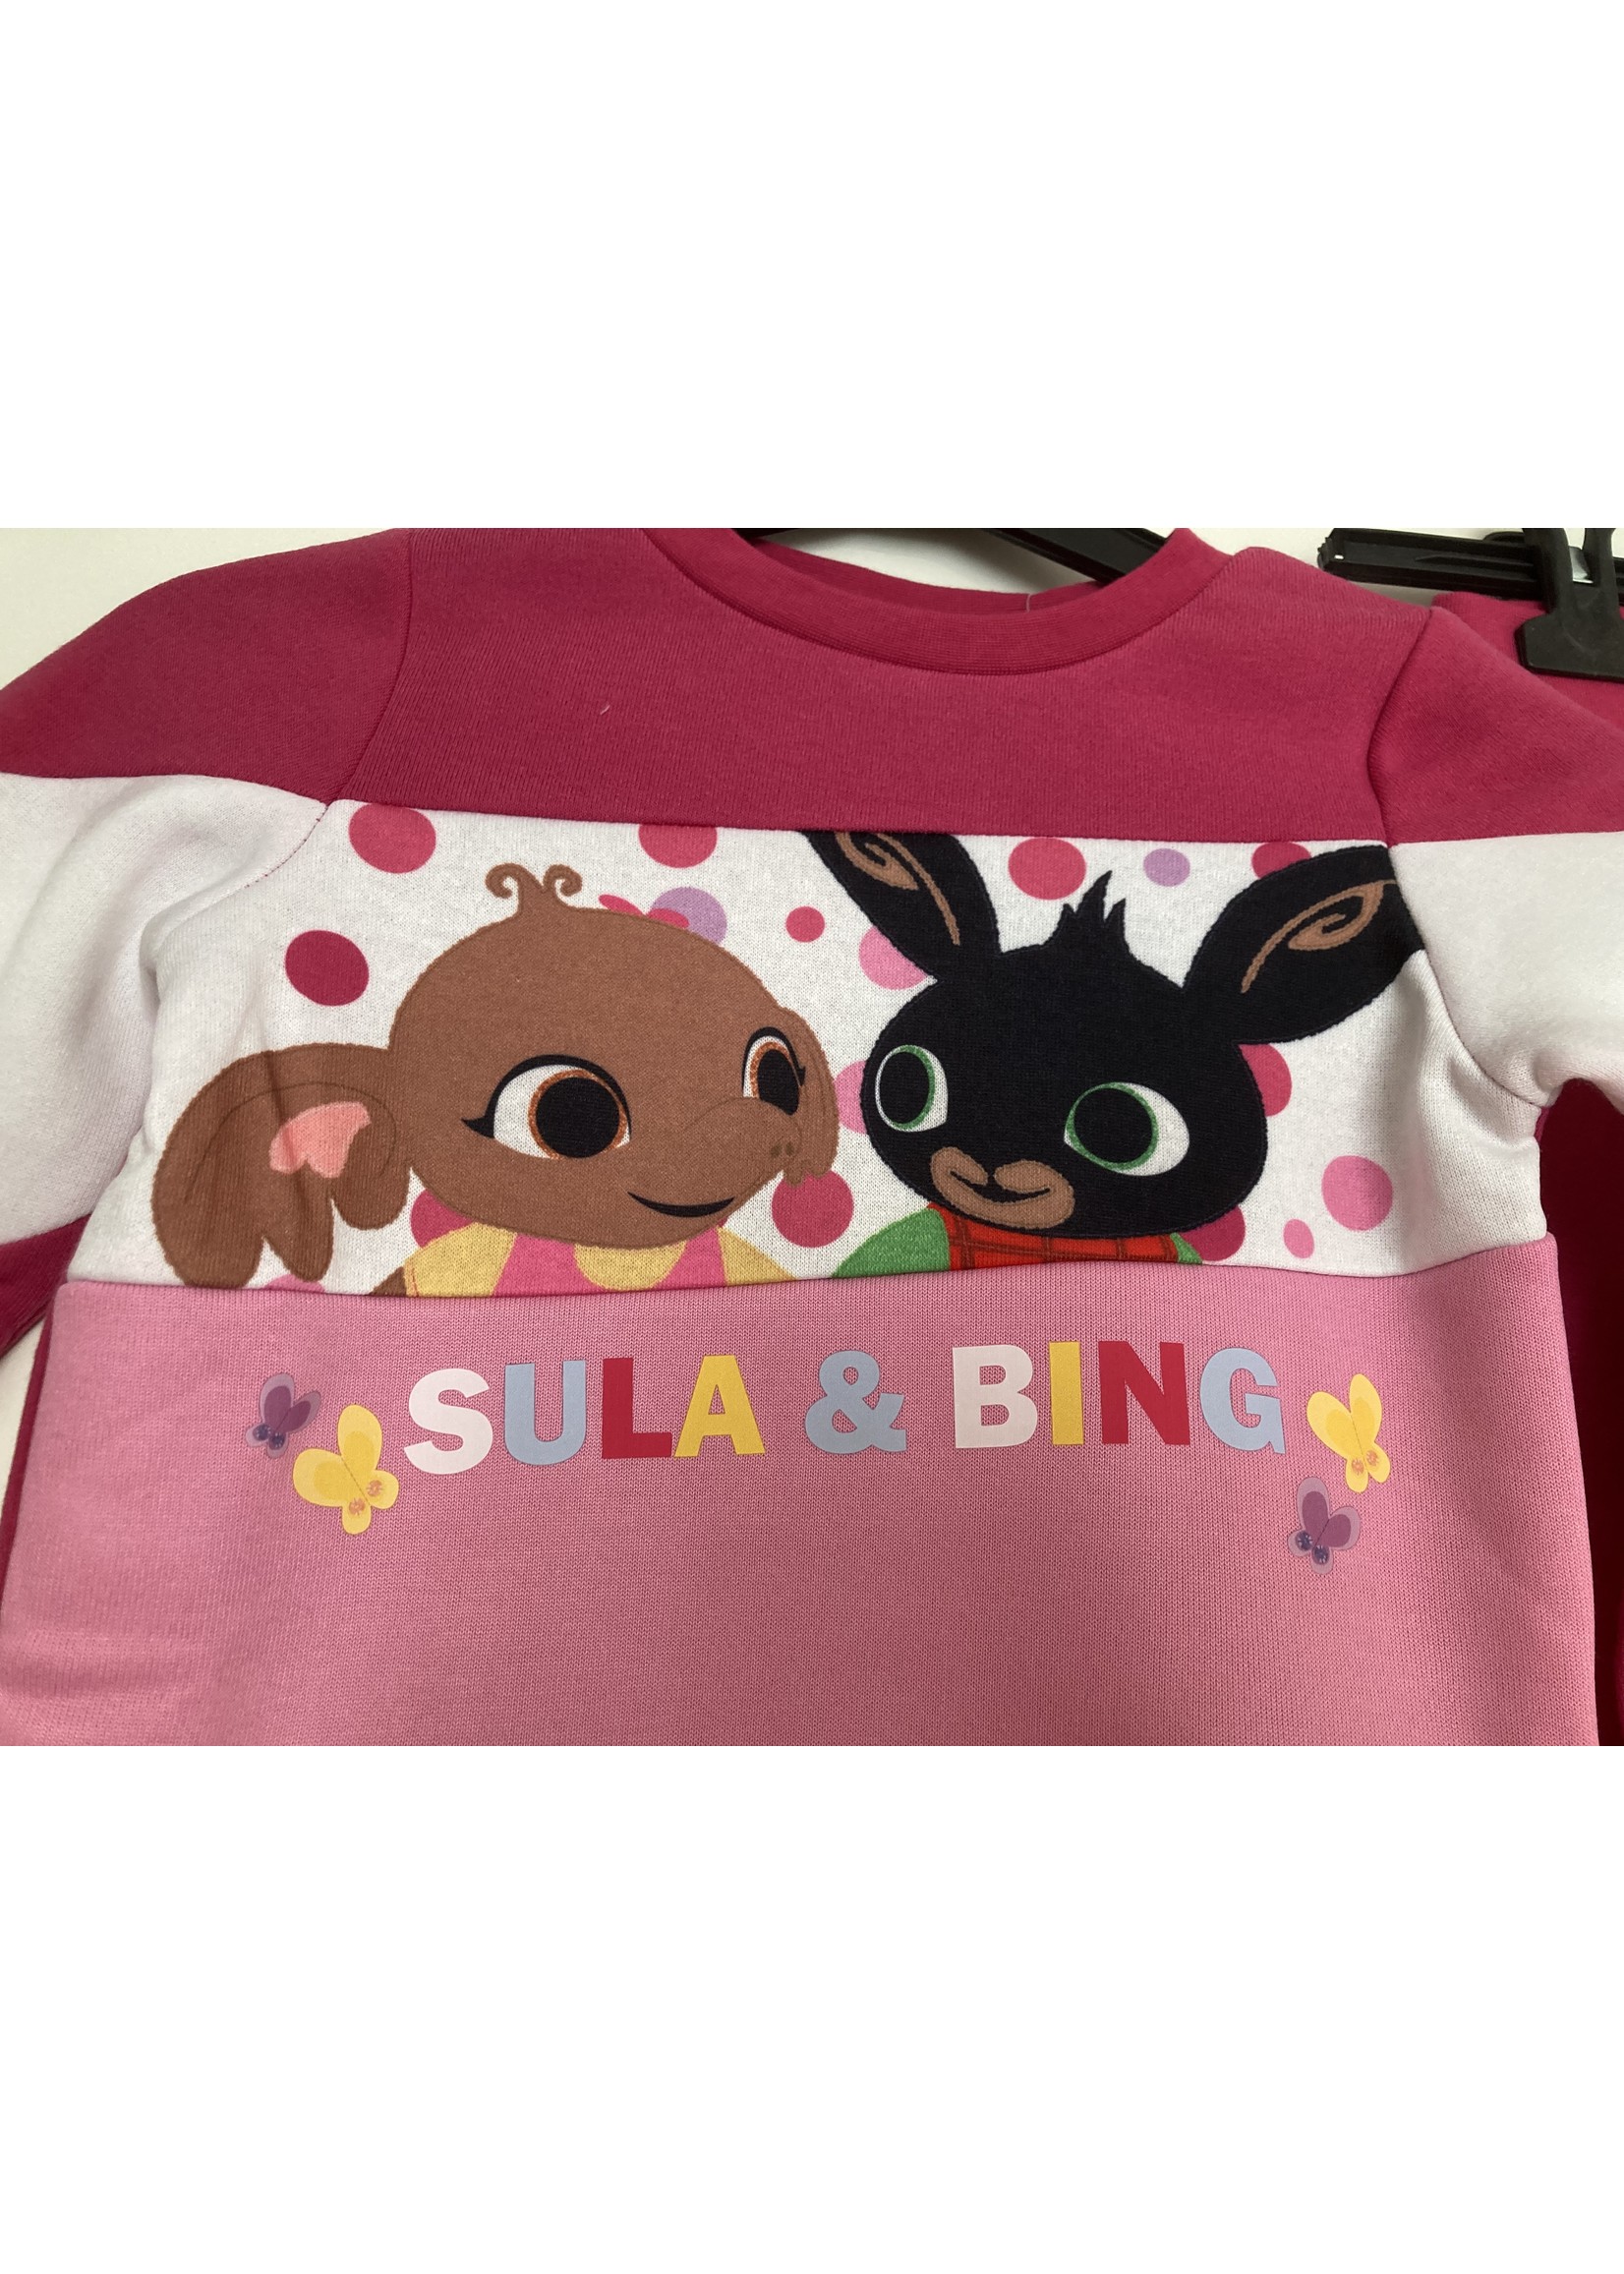 Bing  Bunny Bing jogging suit from Bing pink